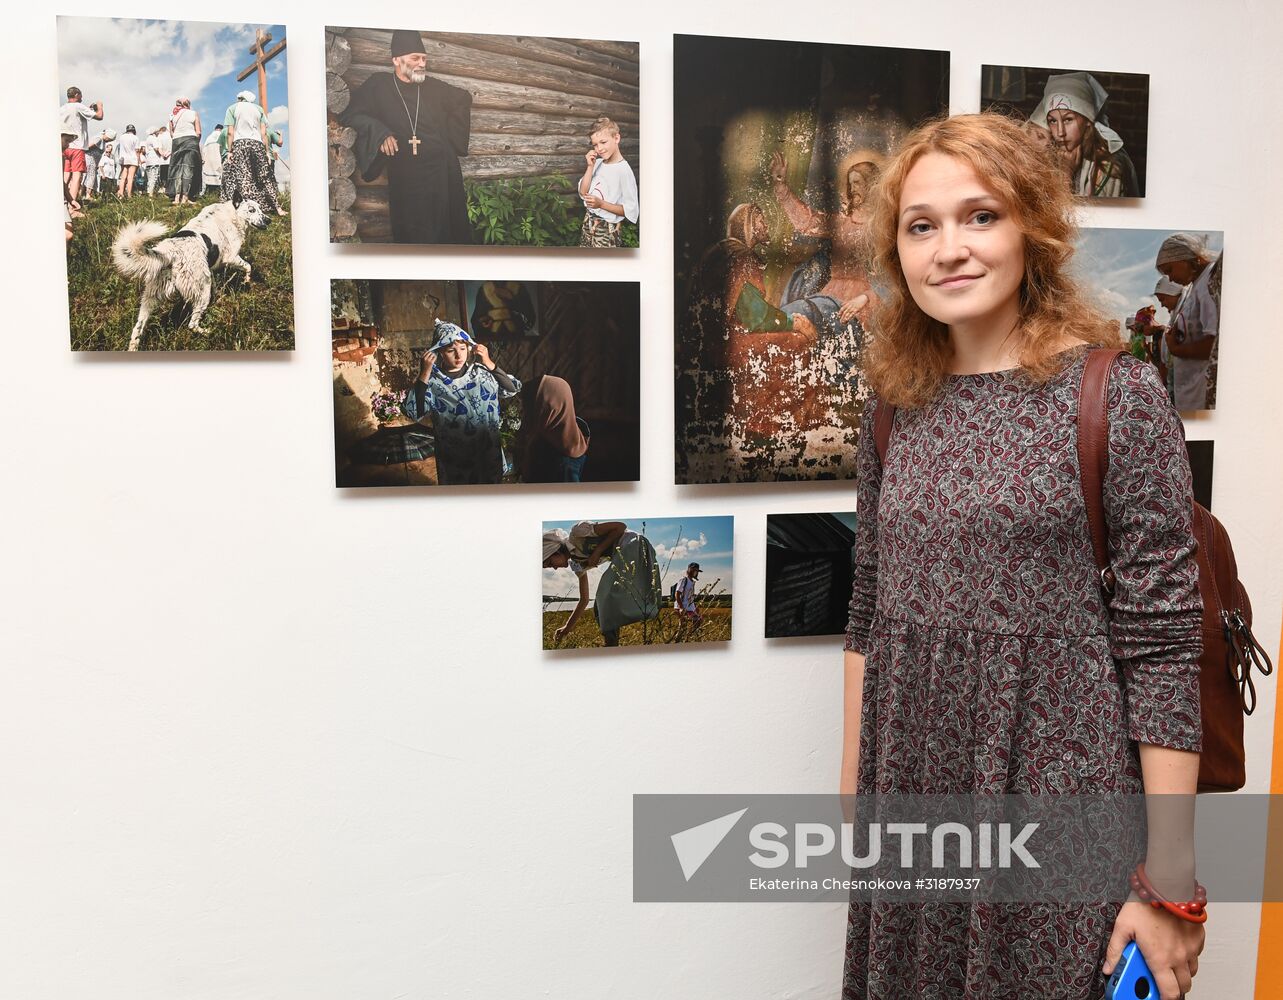 Award ceremony of Andrei Stenin International Press Photo Contest